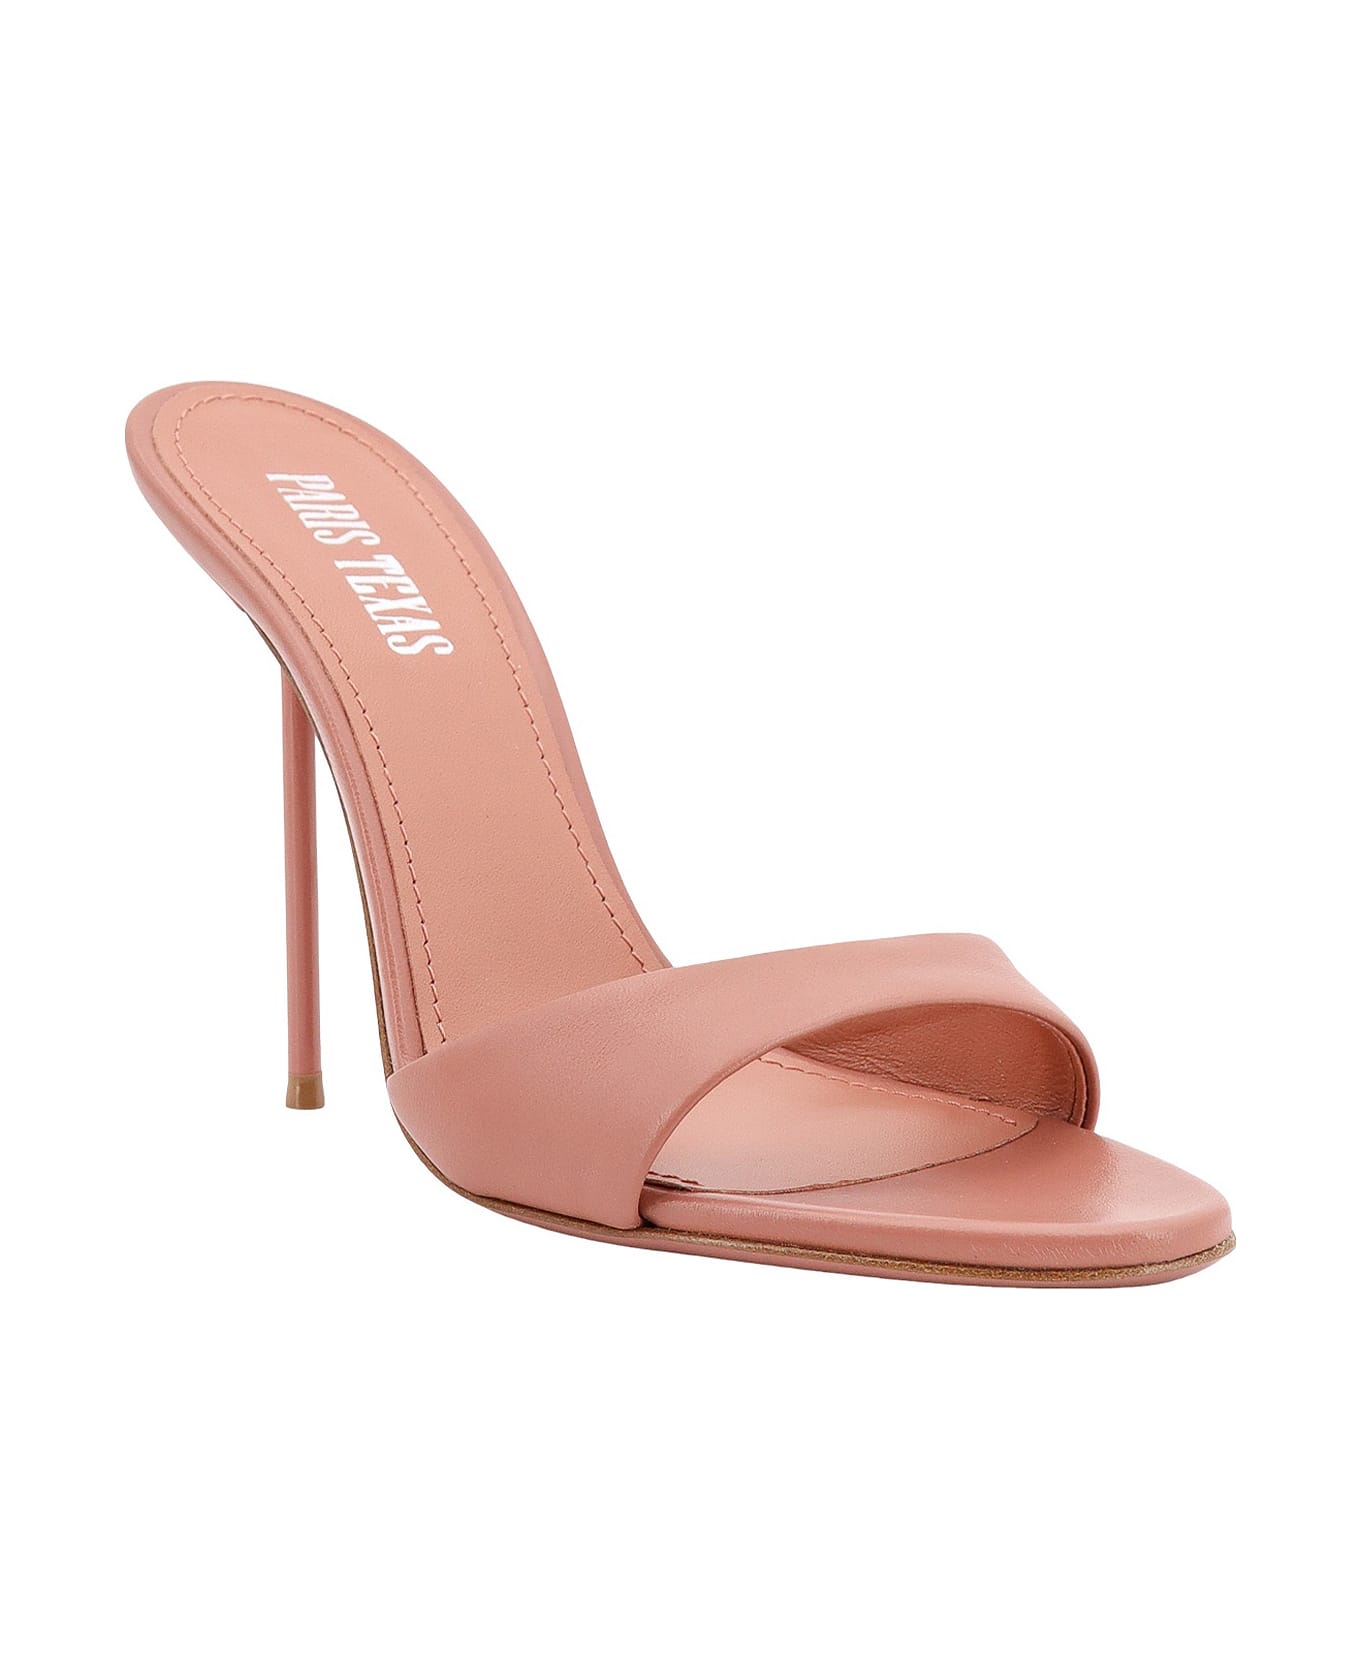 Paris Texas Lidia Sandals - Pink サンダル